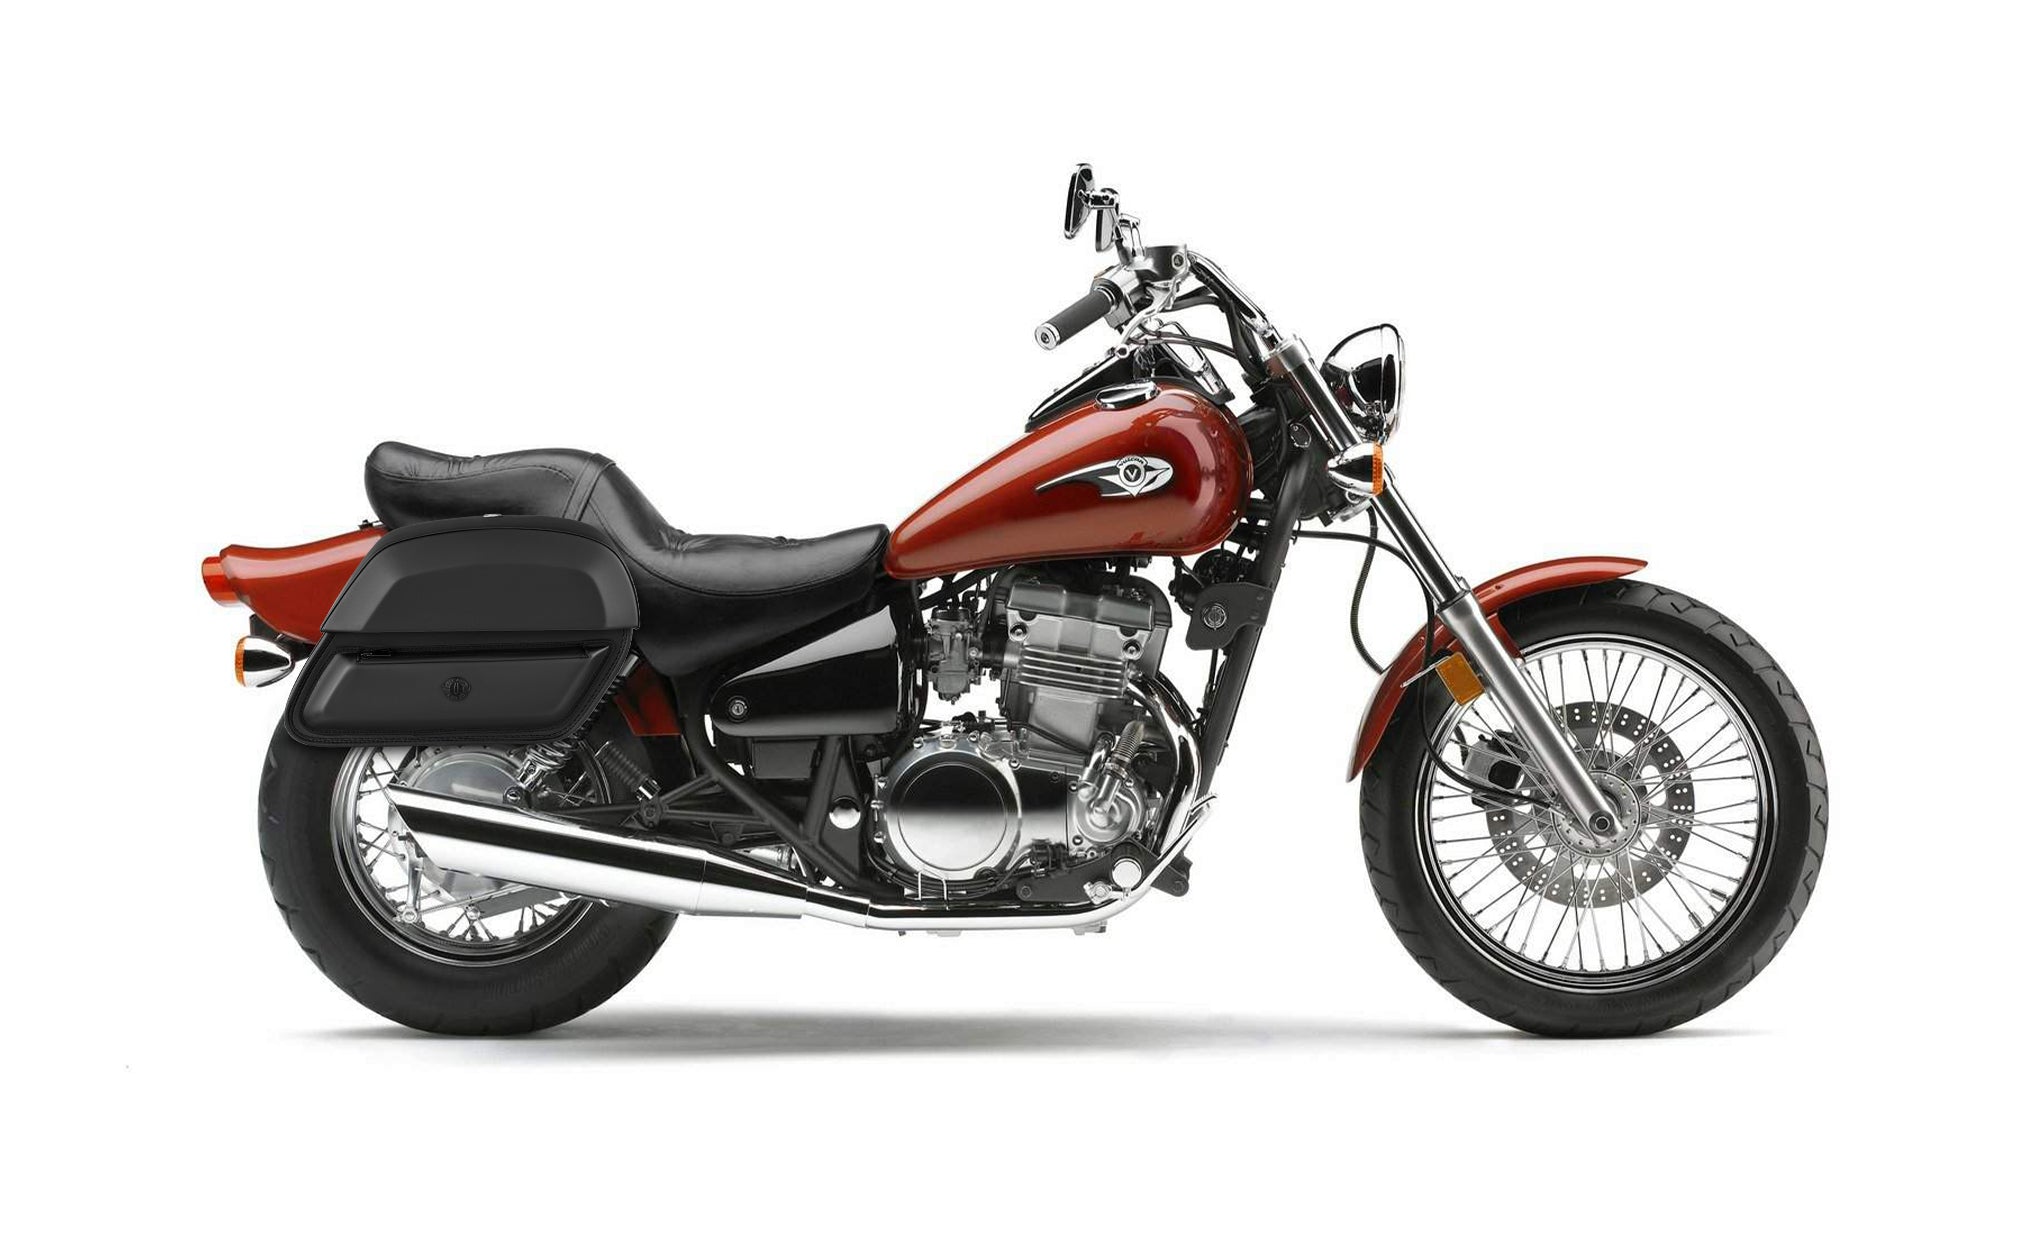 28L - Wraith Medium Vulcan 500 EN500 Leather Motorcycle Saddlebags BAG on Bike View @expand